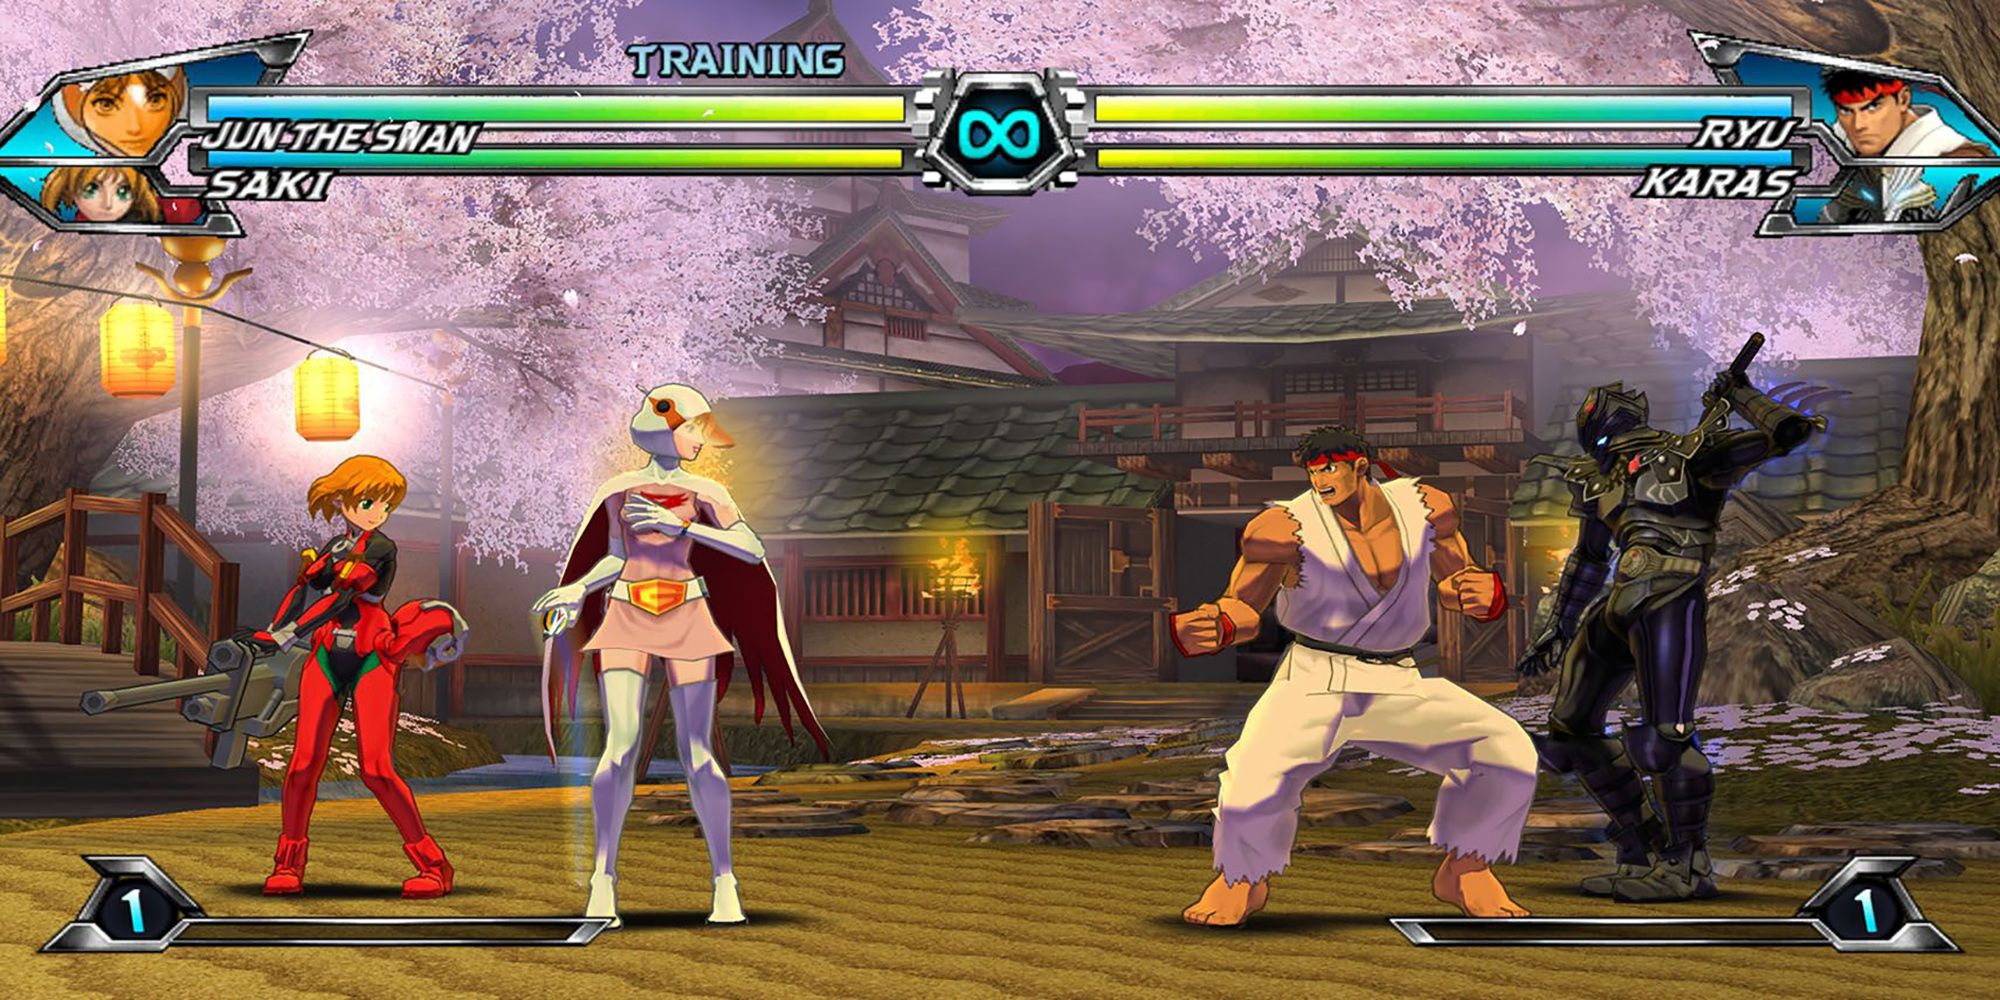 Jun The Swan faces off against Ryu in a battle near a foot bridge. Tatsunoko vs Capcom.